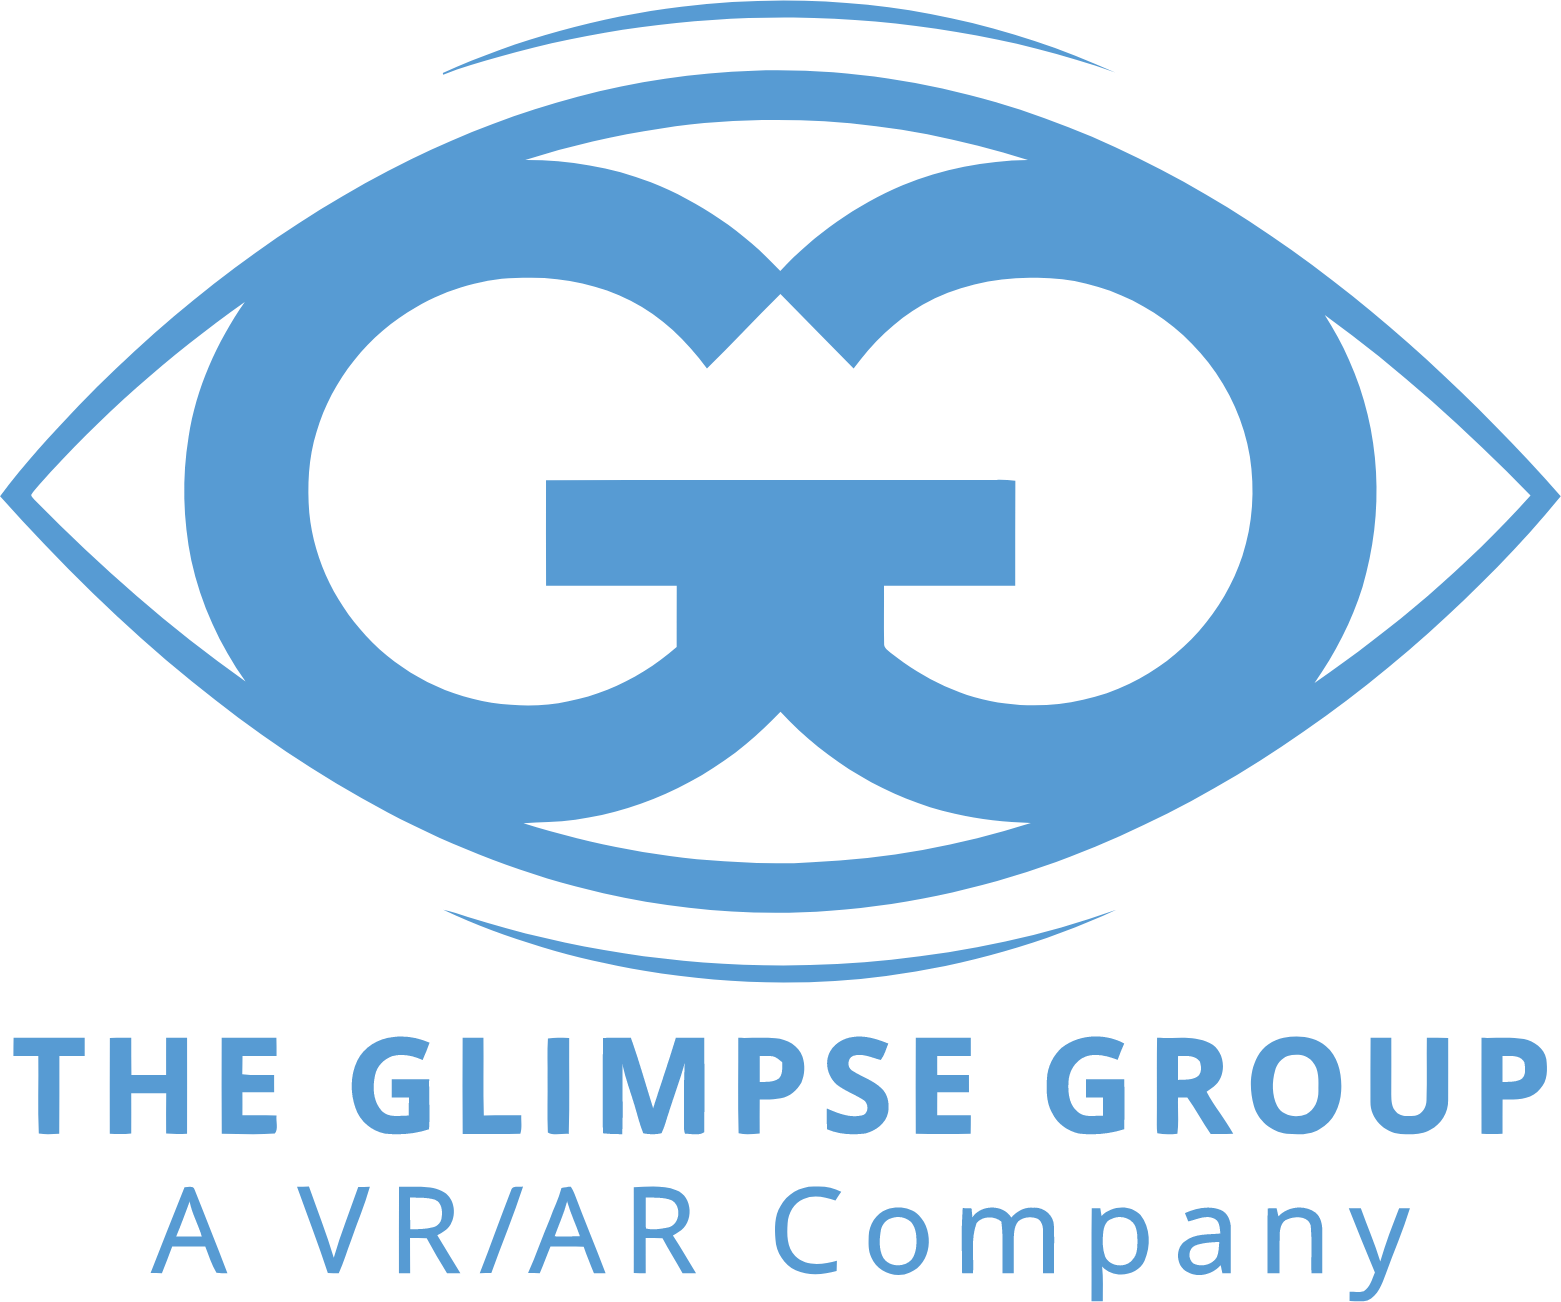 The Glimpse Group logo large (transparent PNG)